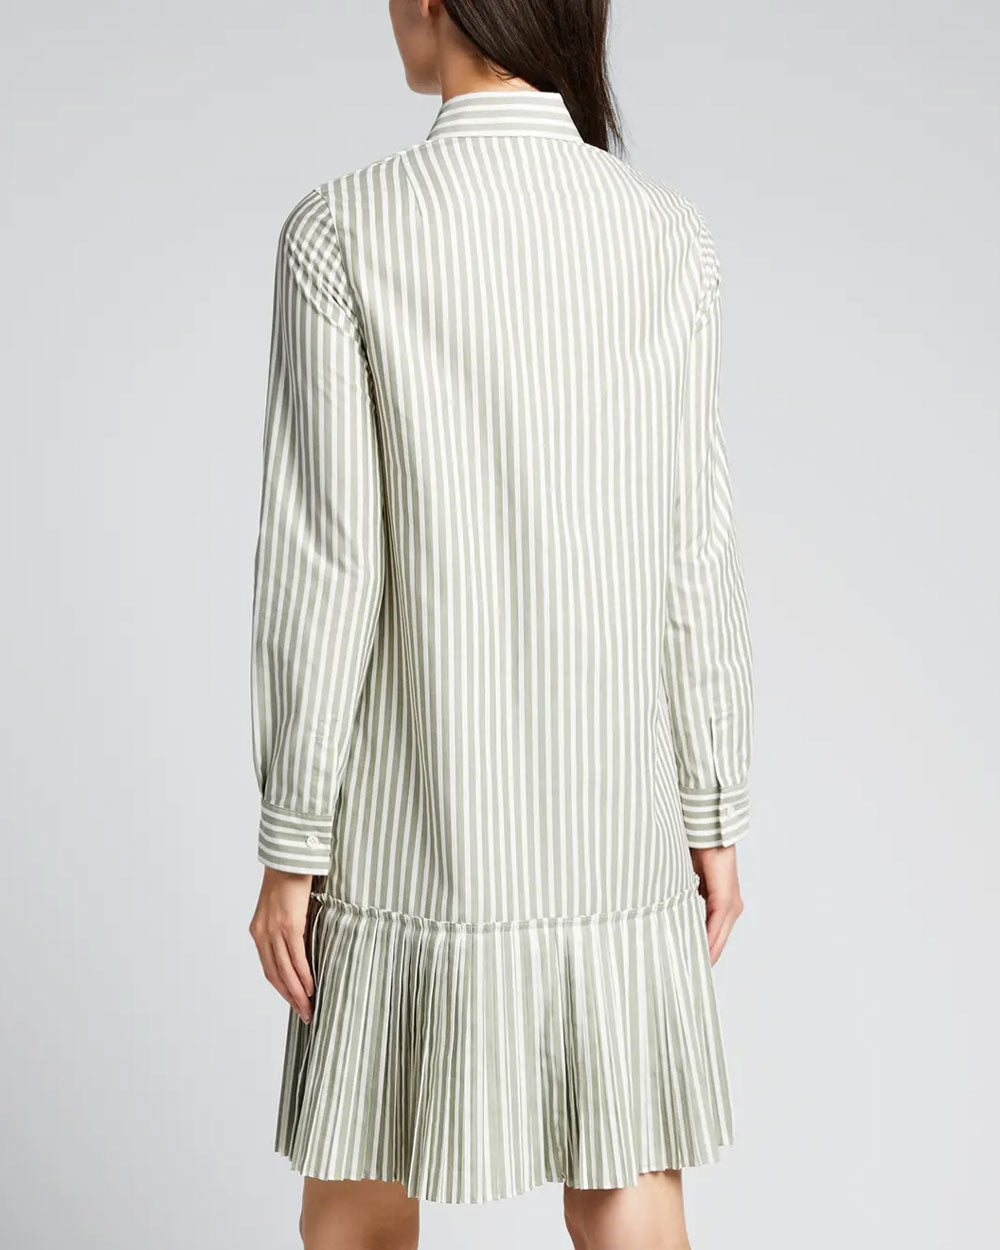 Olive and Cream Striped Pleated Hem Shirt Dress